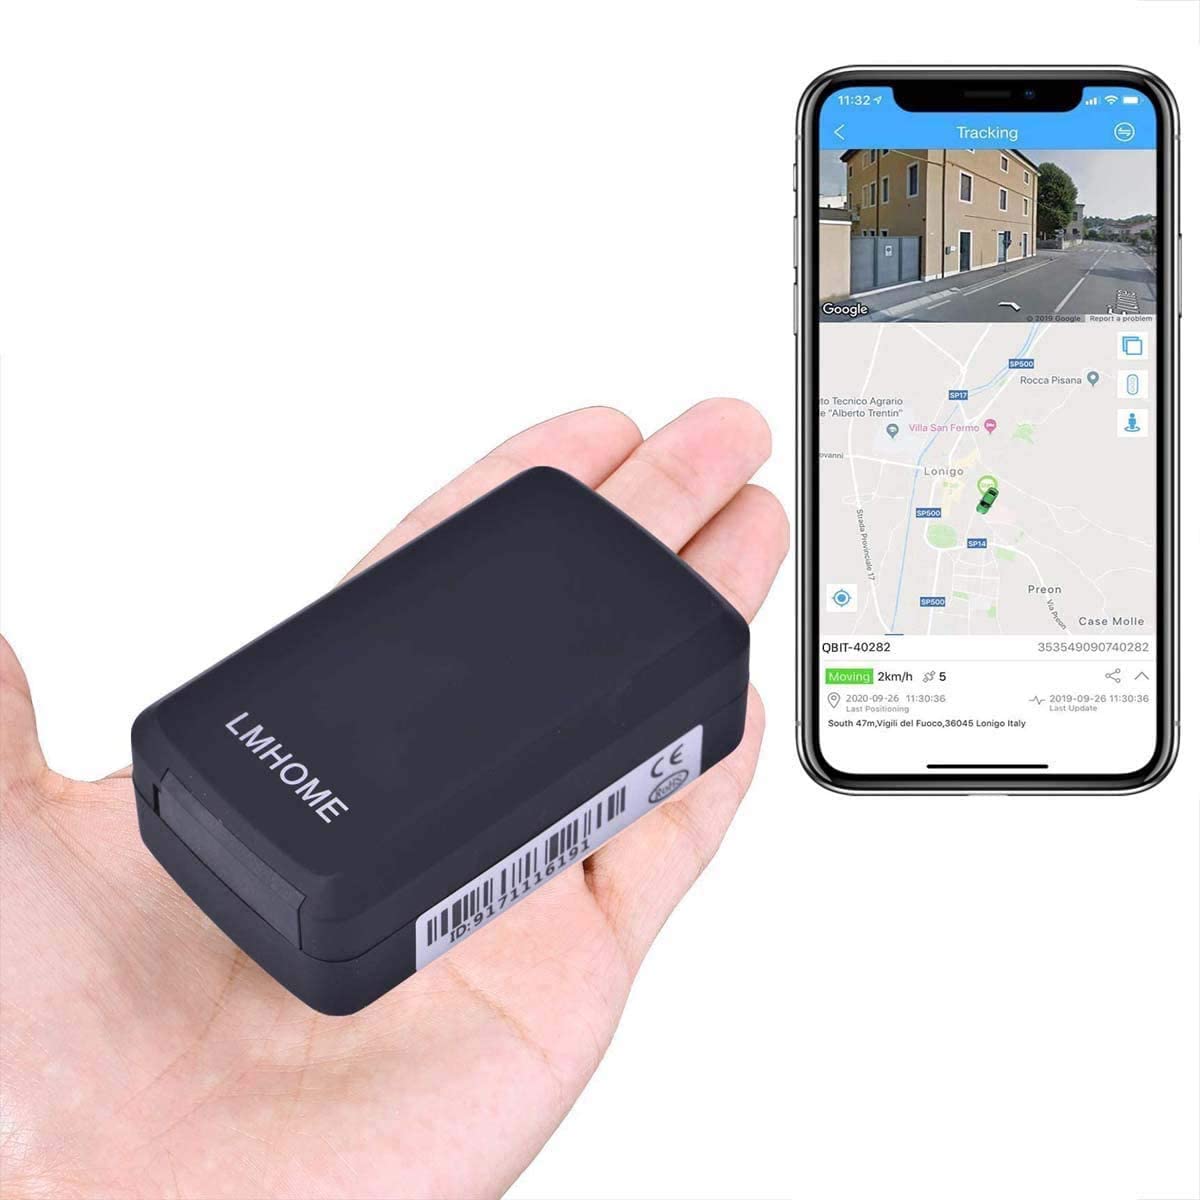 LM002B GPS Tracker Car LMHome 2G REAT -THERING TRACKING VOIC MONITOR LOCATOR GPS 60 -дневный резервный водонепроницаемый бесплатное веб -приложение